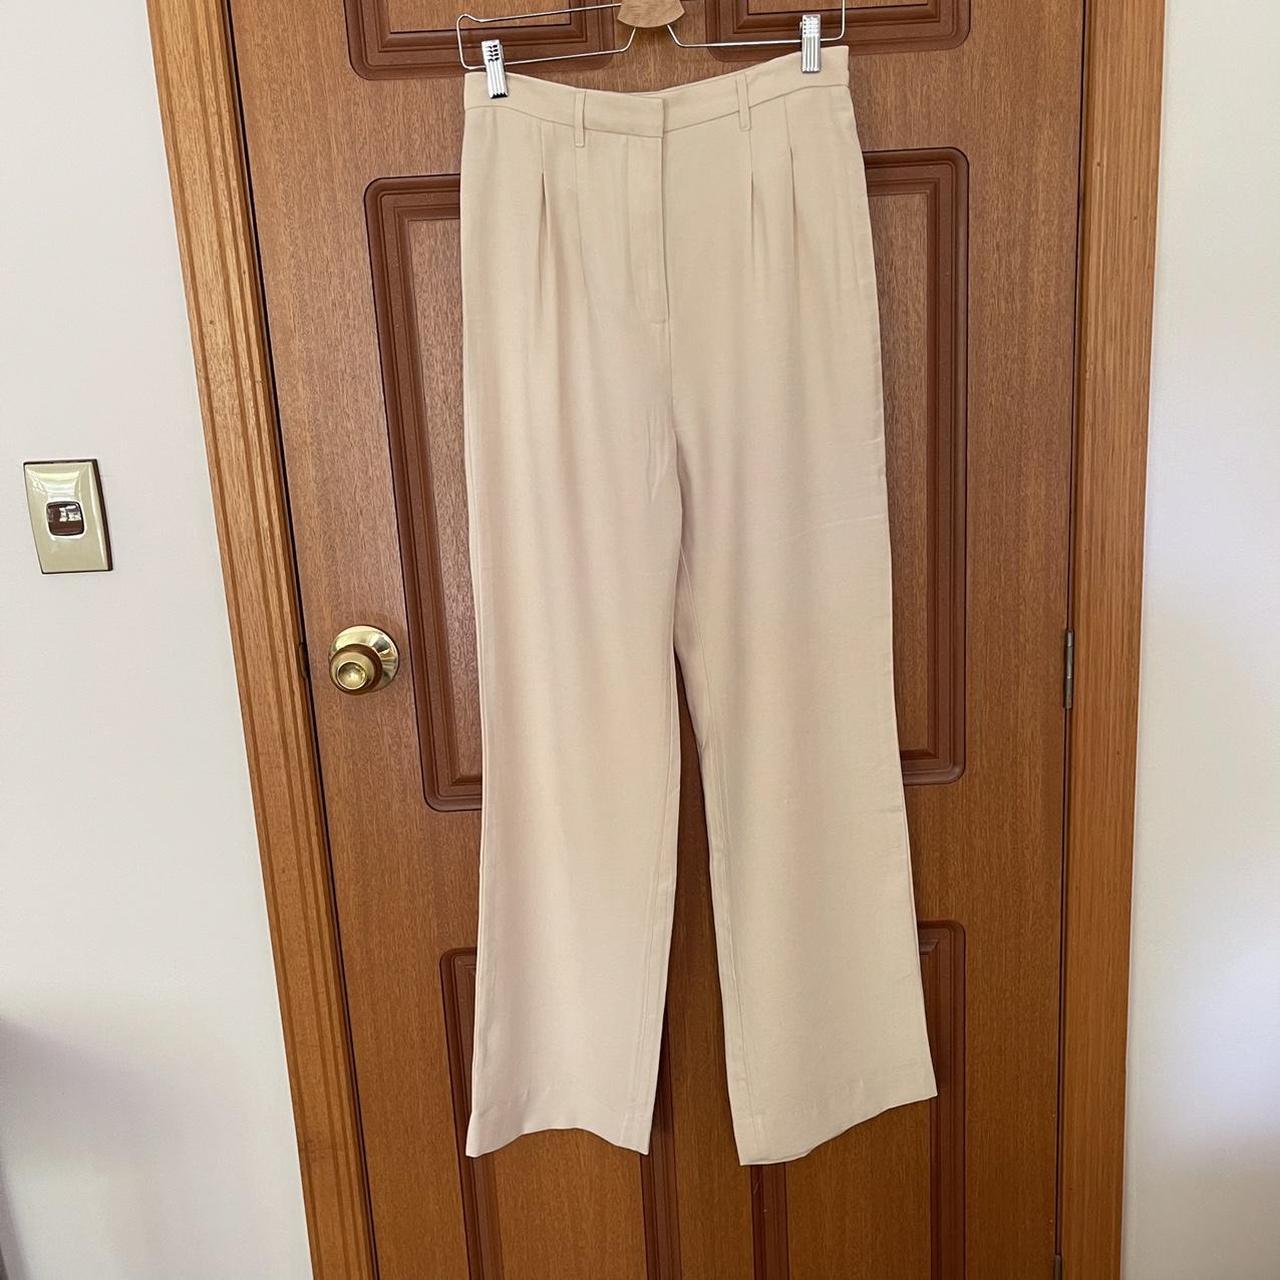 KOOKAI Long high-waisted pants. Retail $180 Size... - Depop